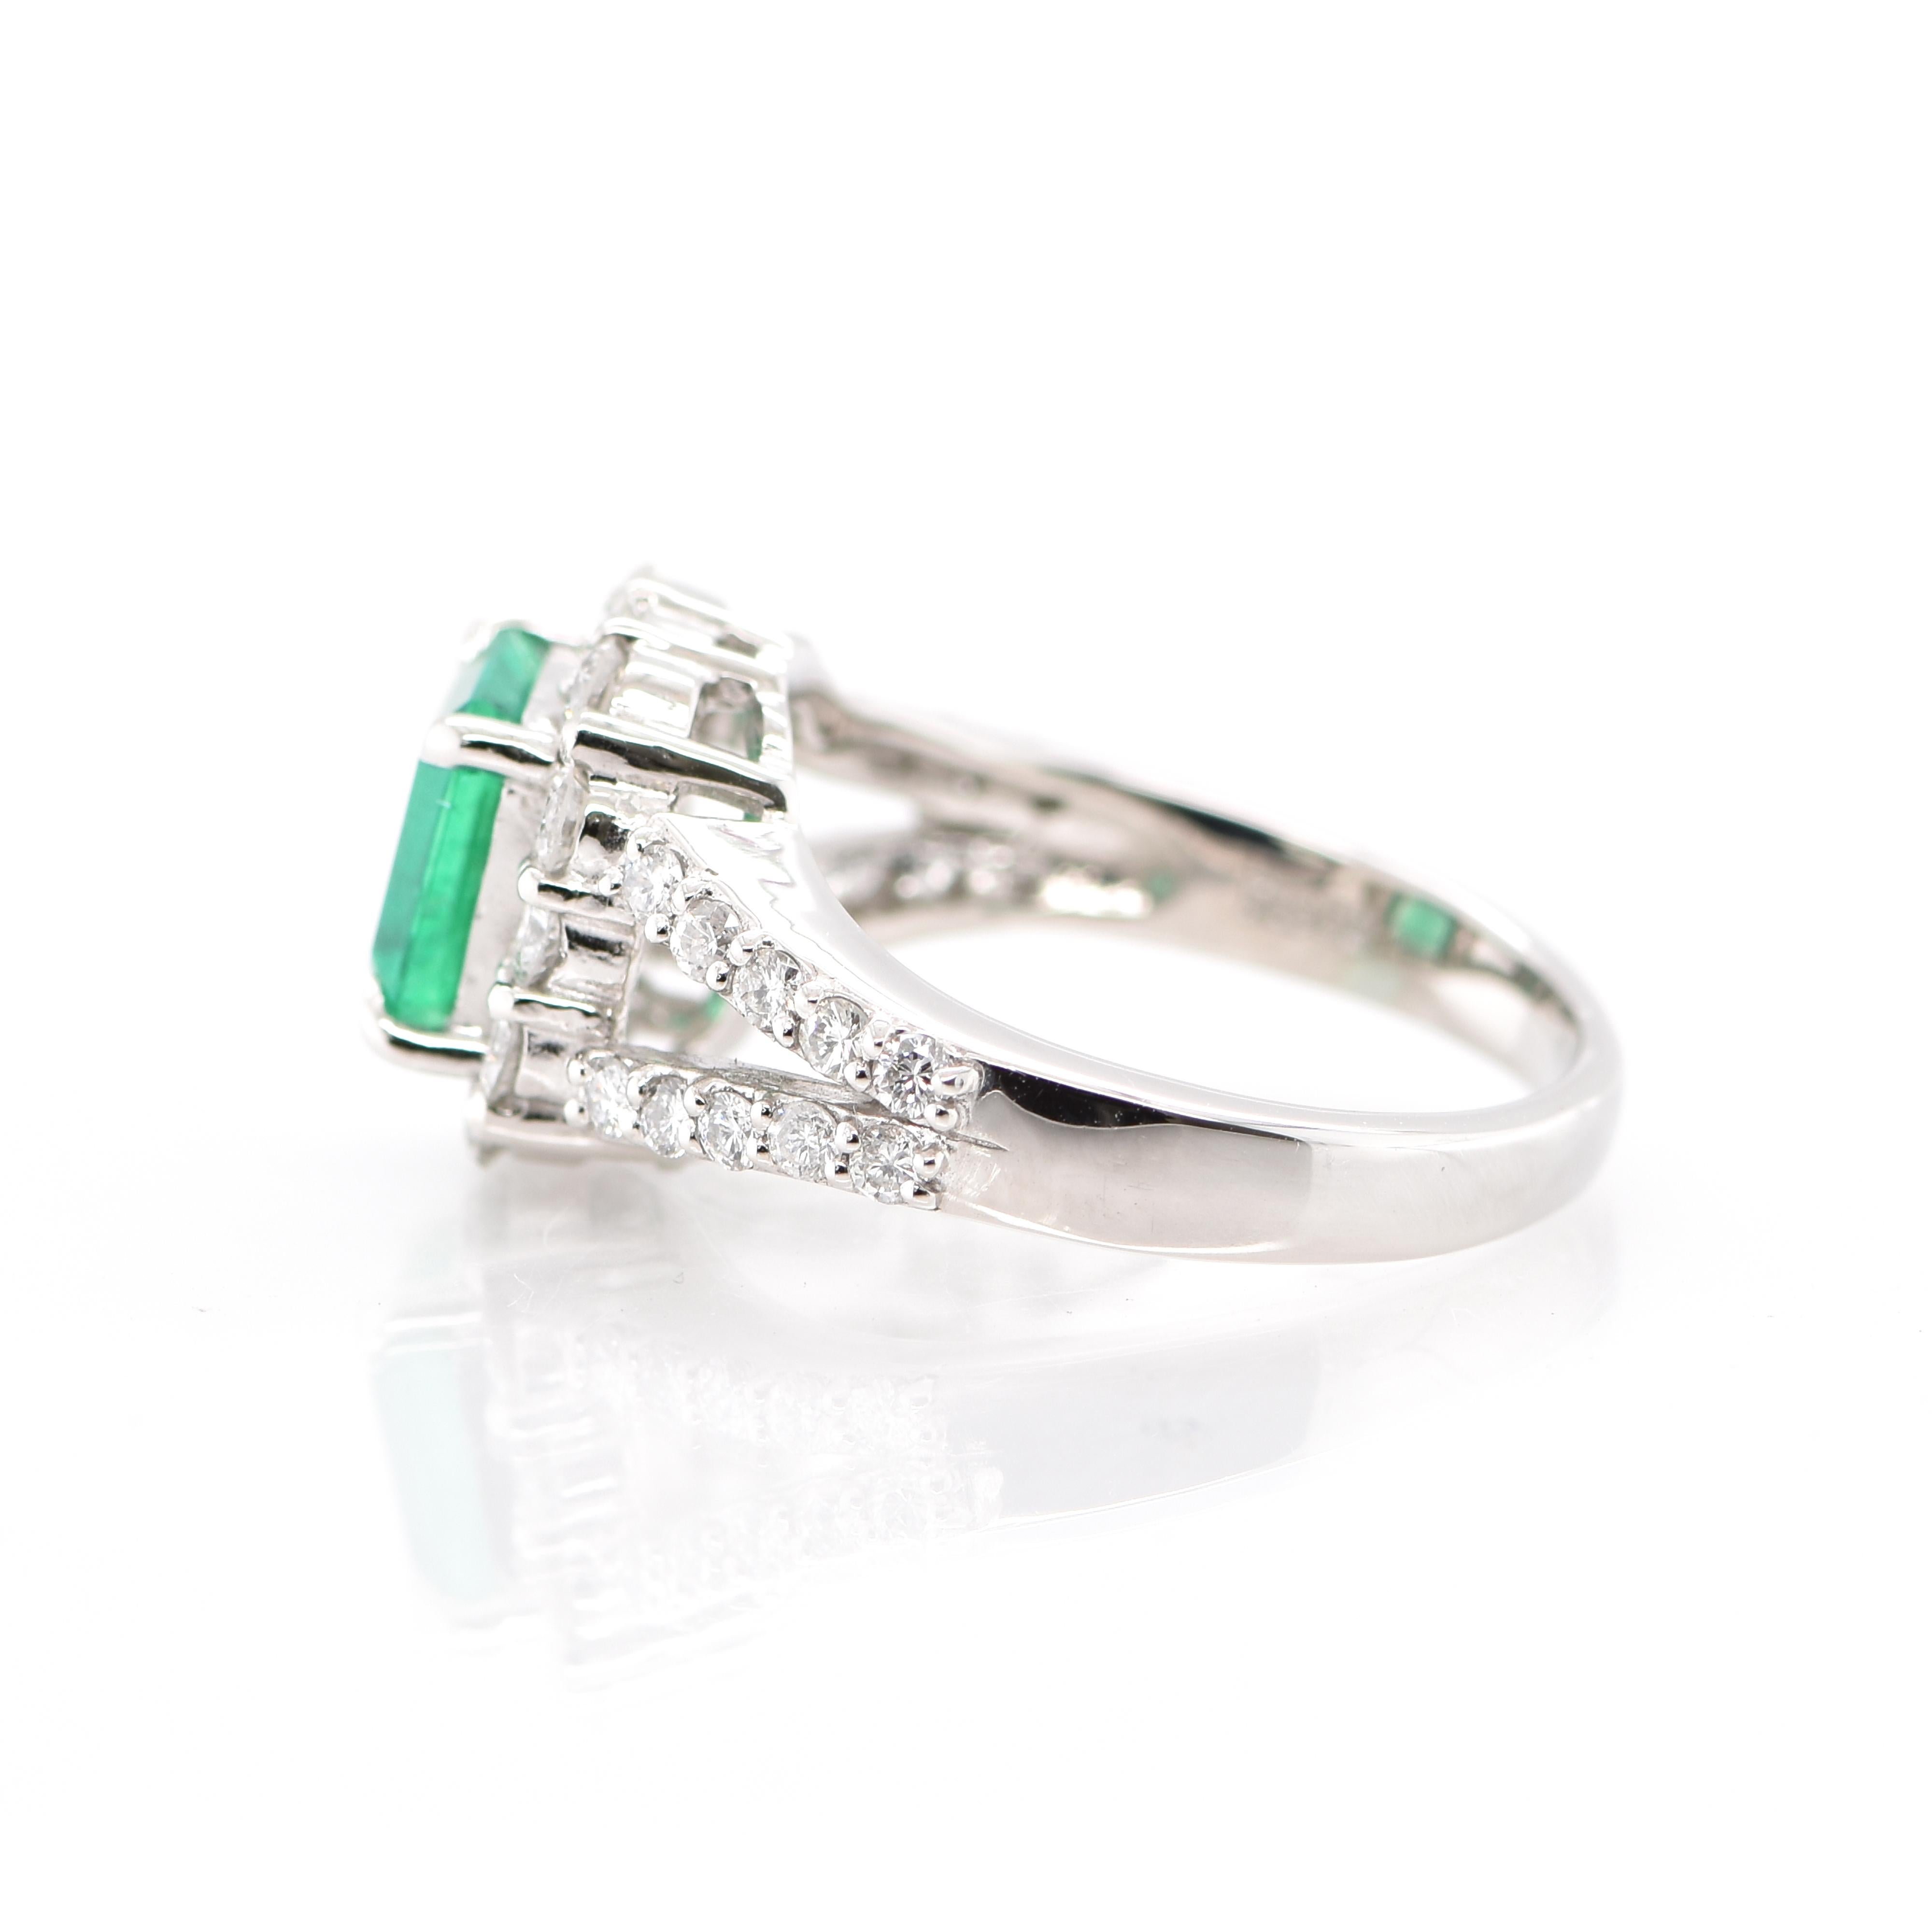 Emerald Cut 1.546 Carat Natural Emerald and Diamond Ring Set in Platinum